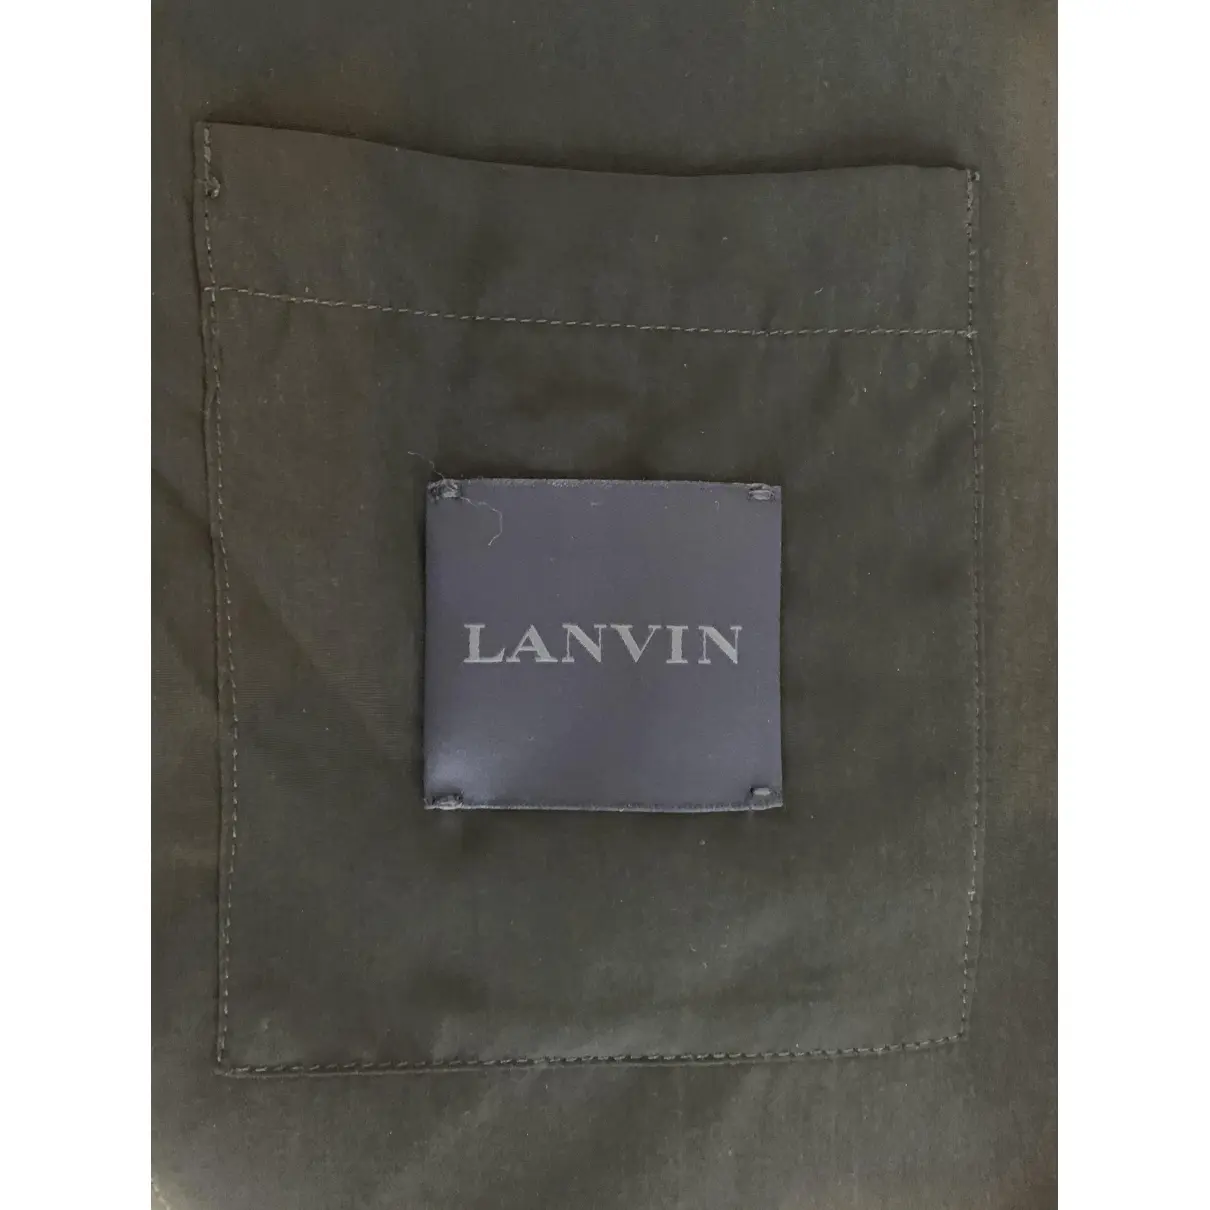 Buy Lanvin Jacket online